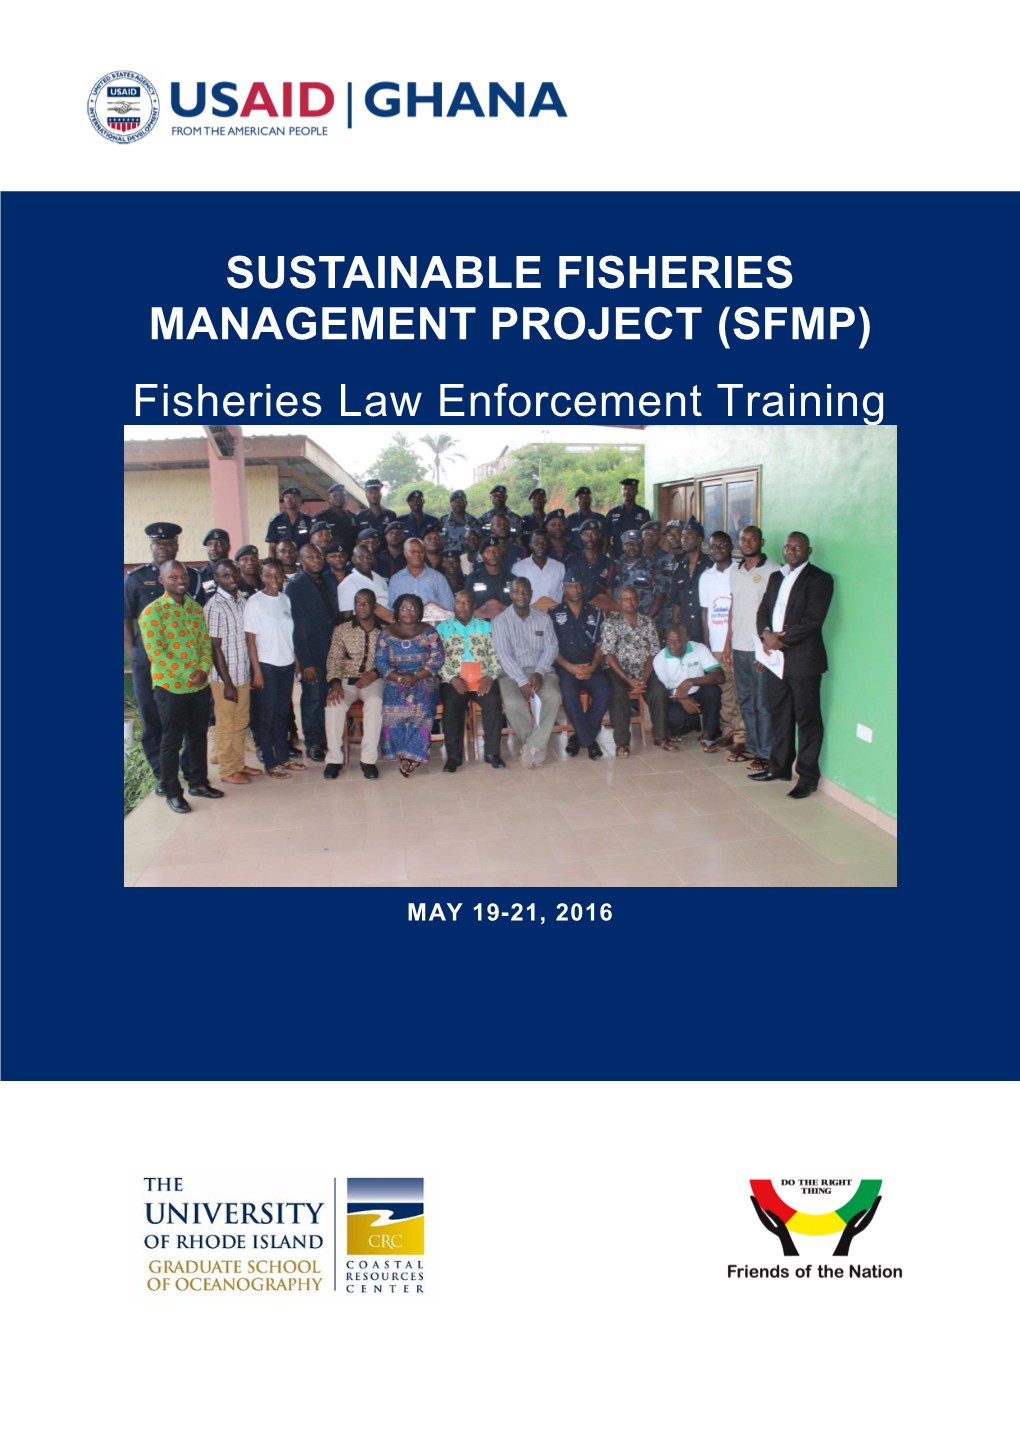 (SFMP) Fisheries Law Enforcement Training